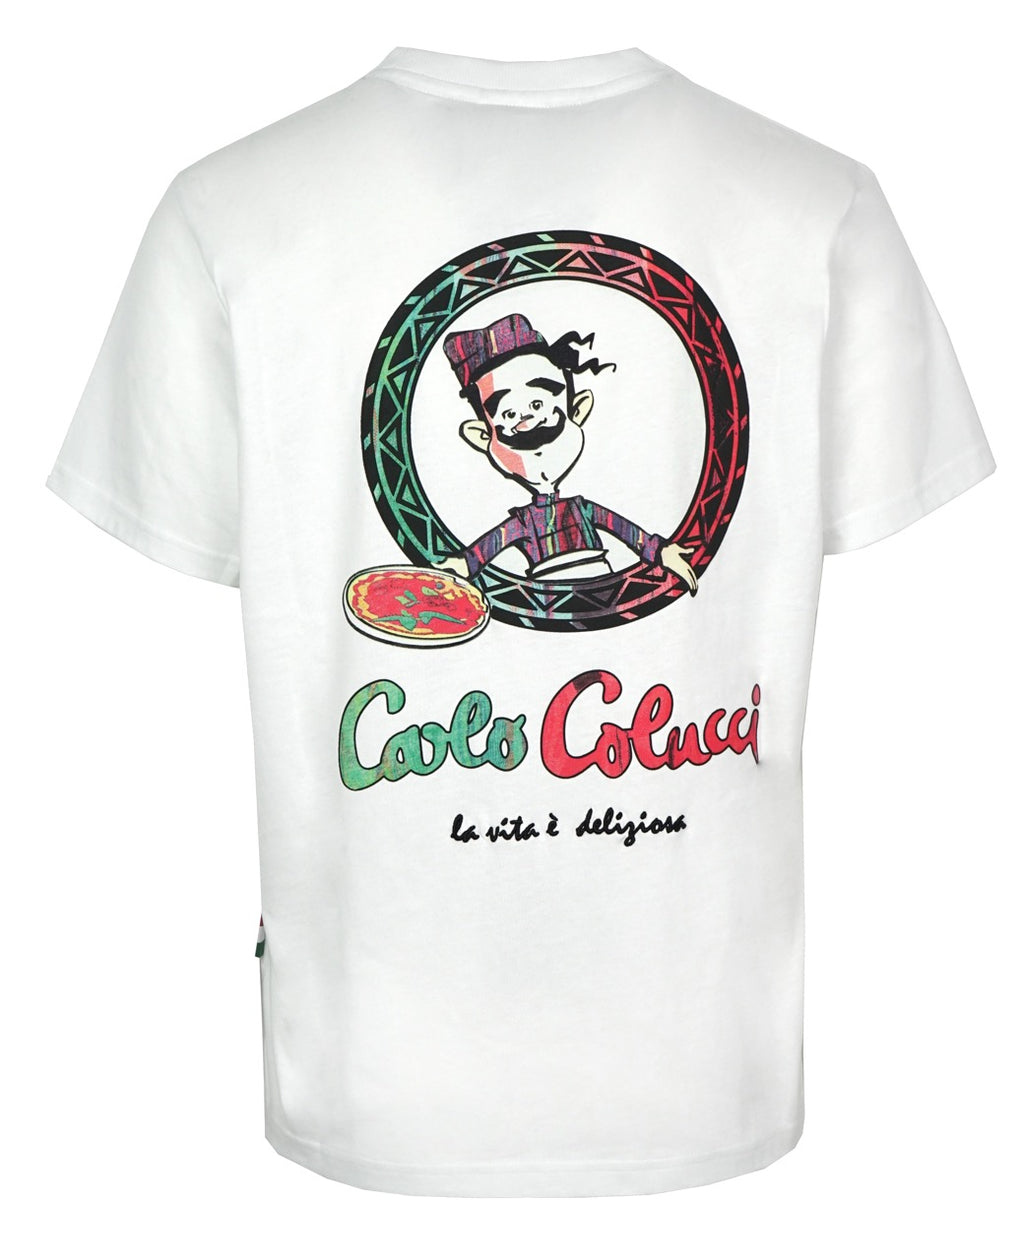 Carlo Colucci Milano Print T-Shirt White - Soulsideshop